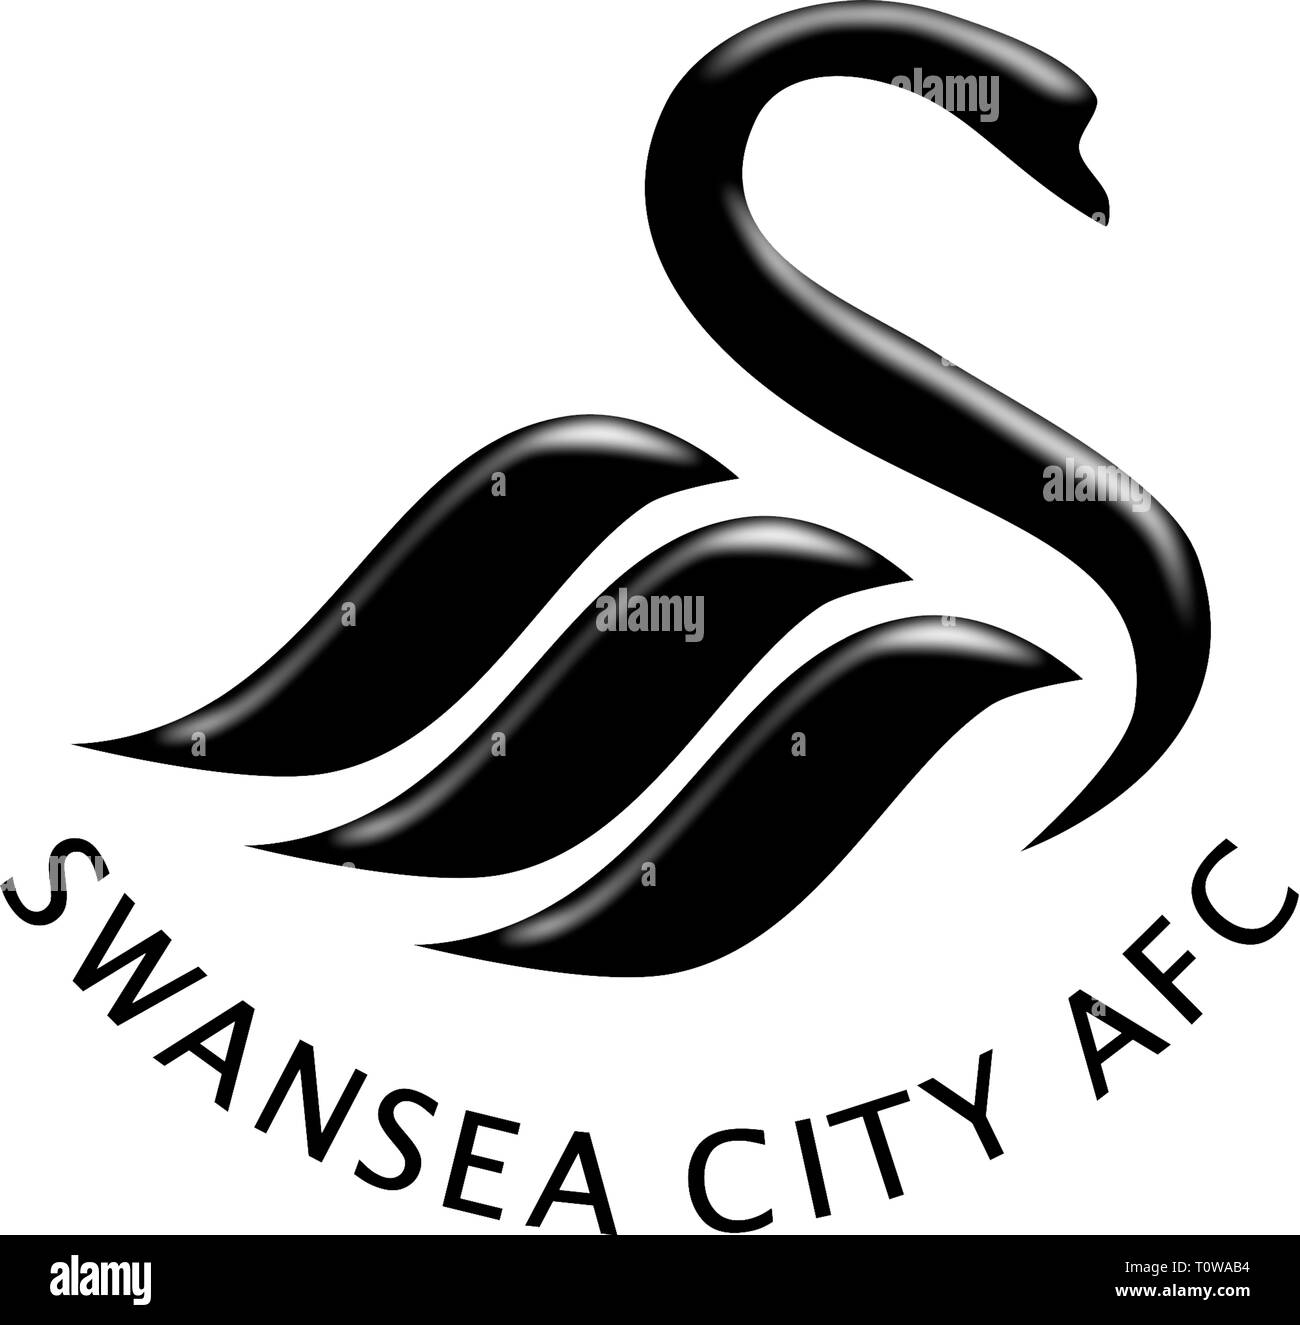 Logo della Welsh football team Swansea City Association Football Club - Regno Unito. Foto Stock